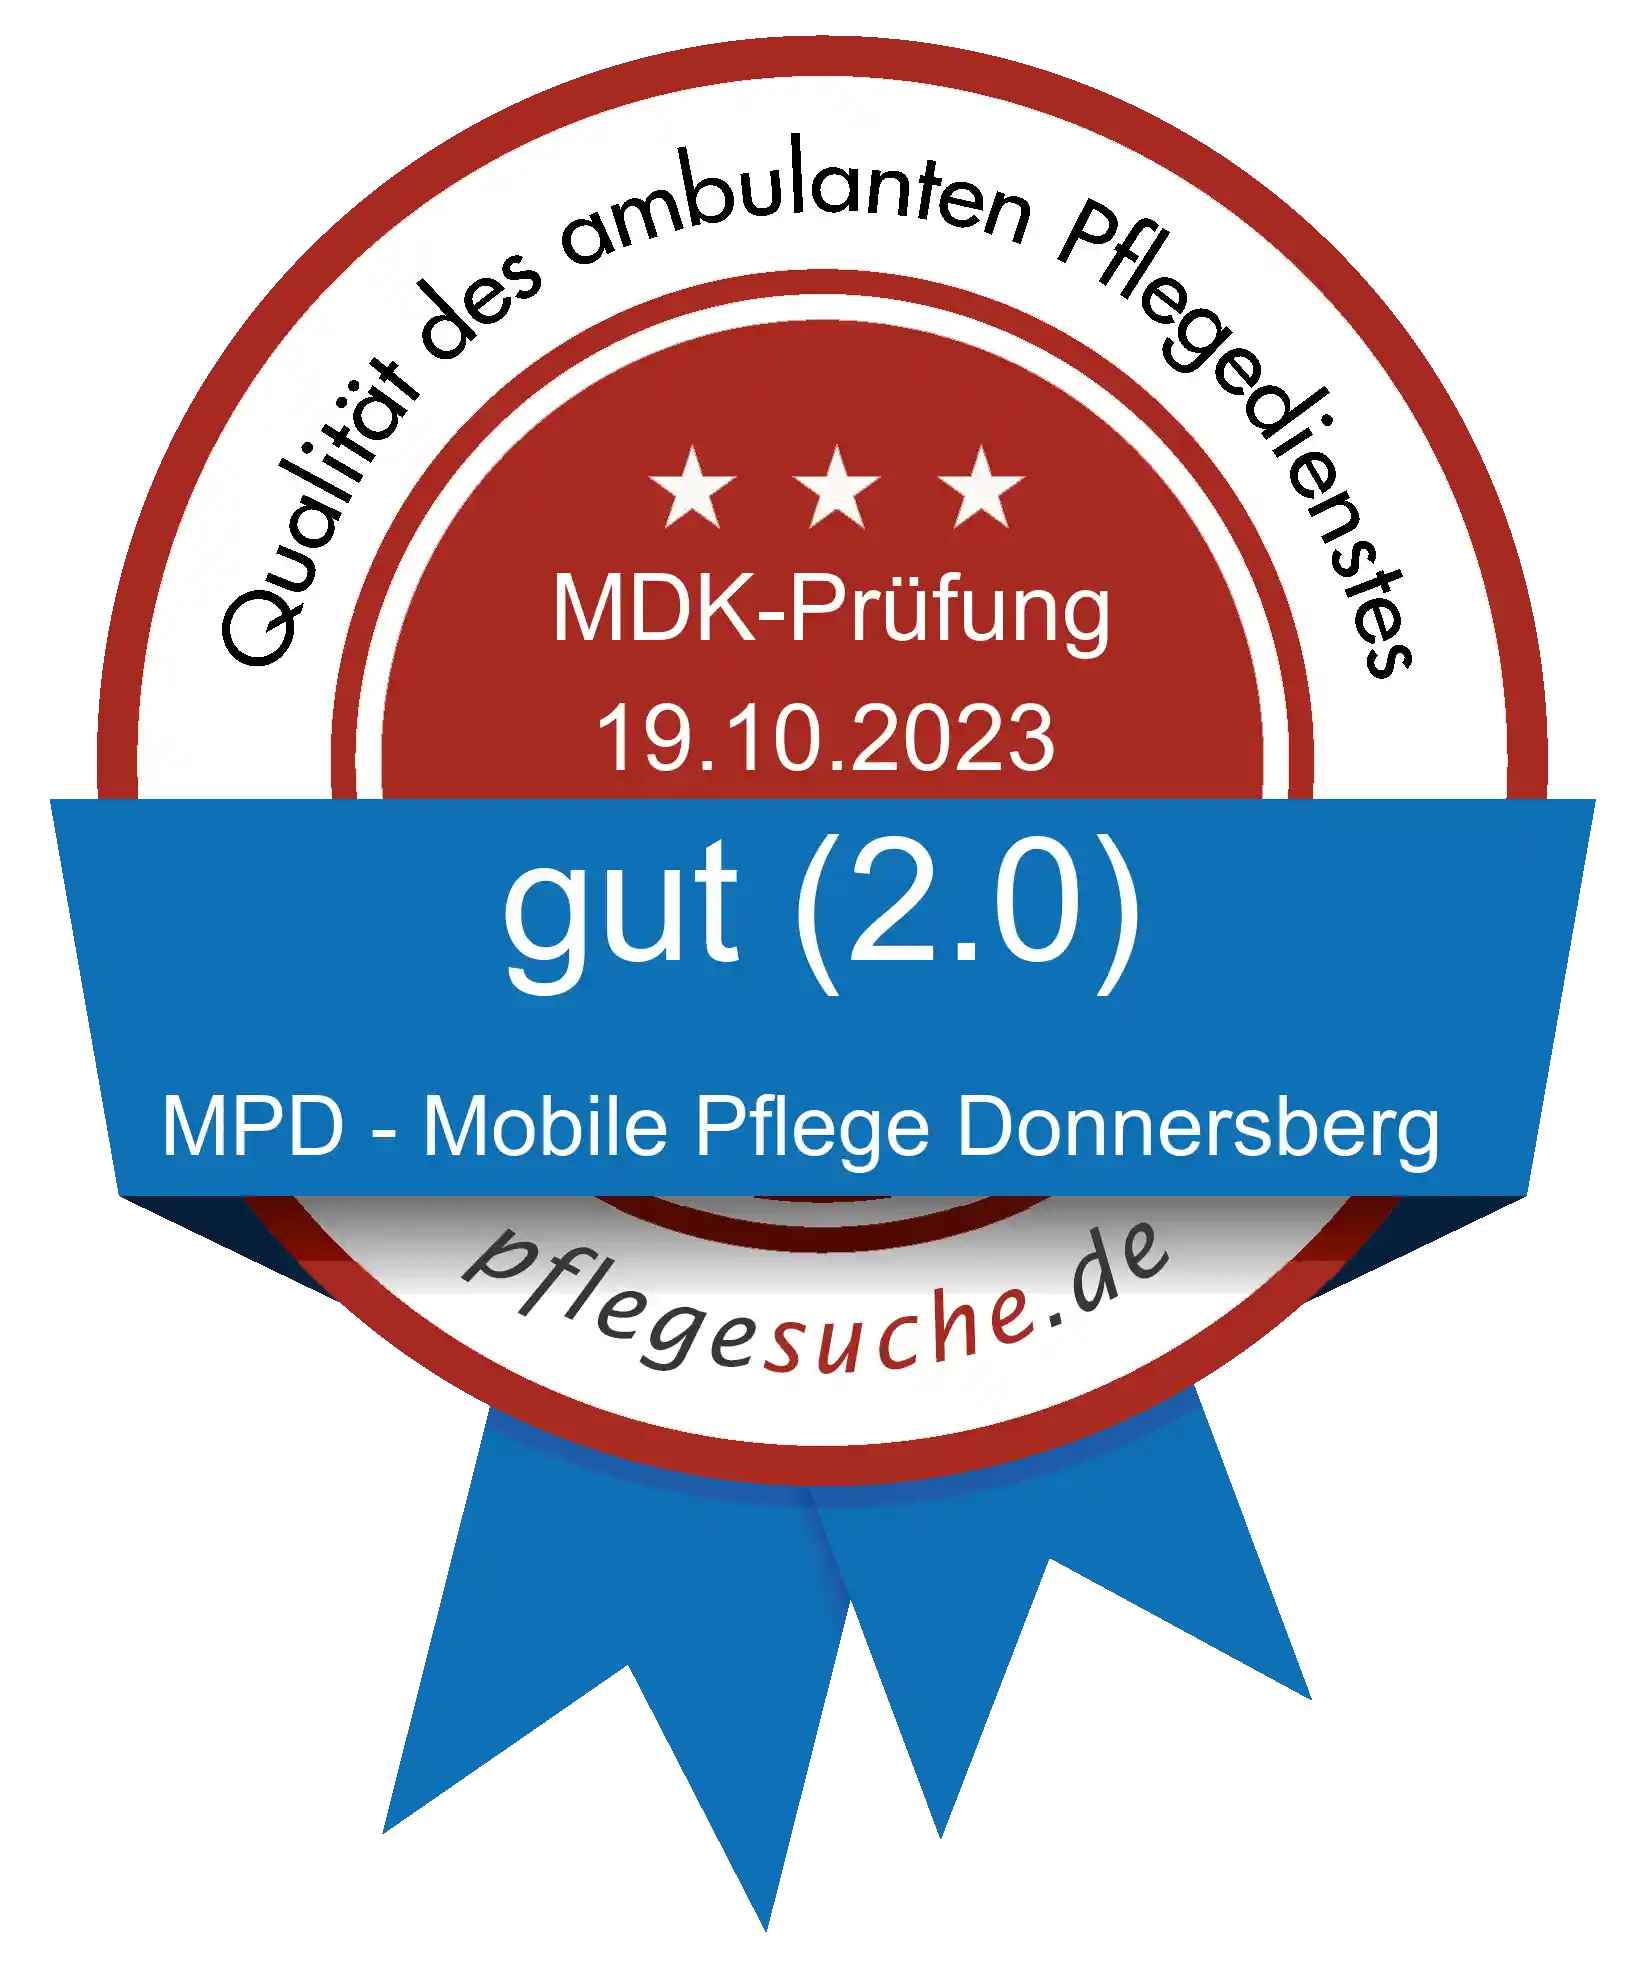 Siegel Benotung: MPD - Mobile Pflege Donnersberg